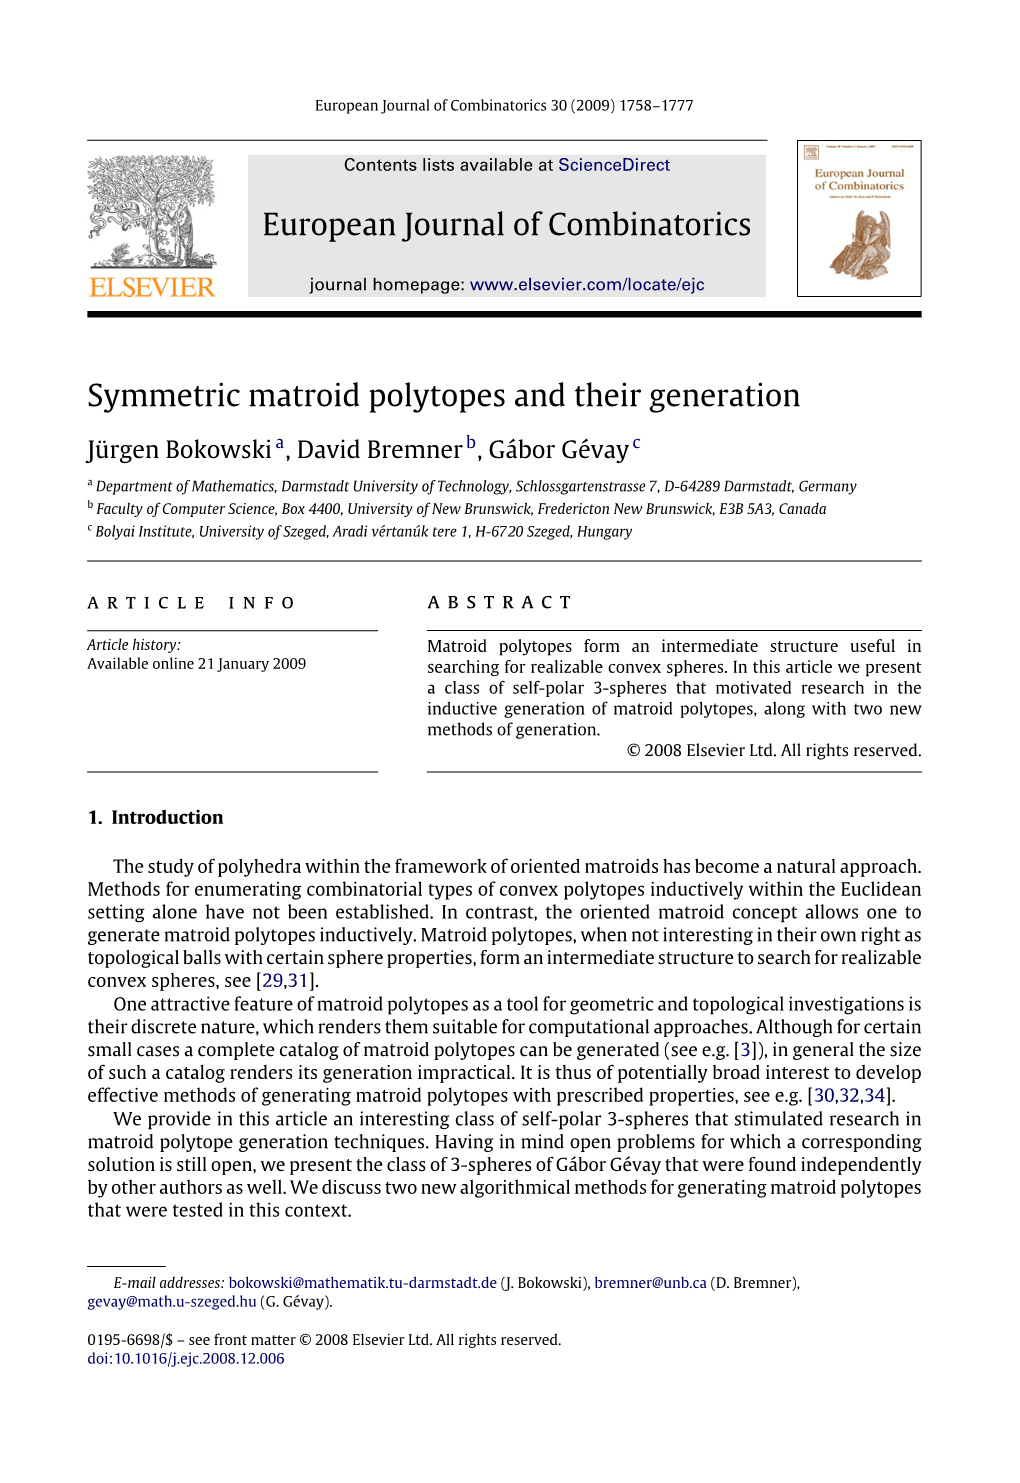 European Journal of Combinatorics Symmetric Matroid Polytopes and Their Generation